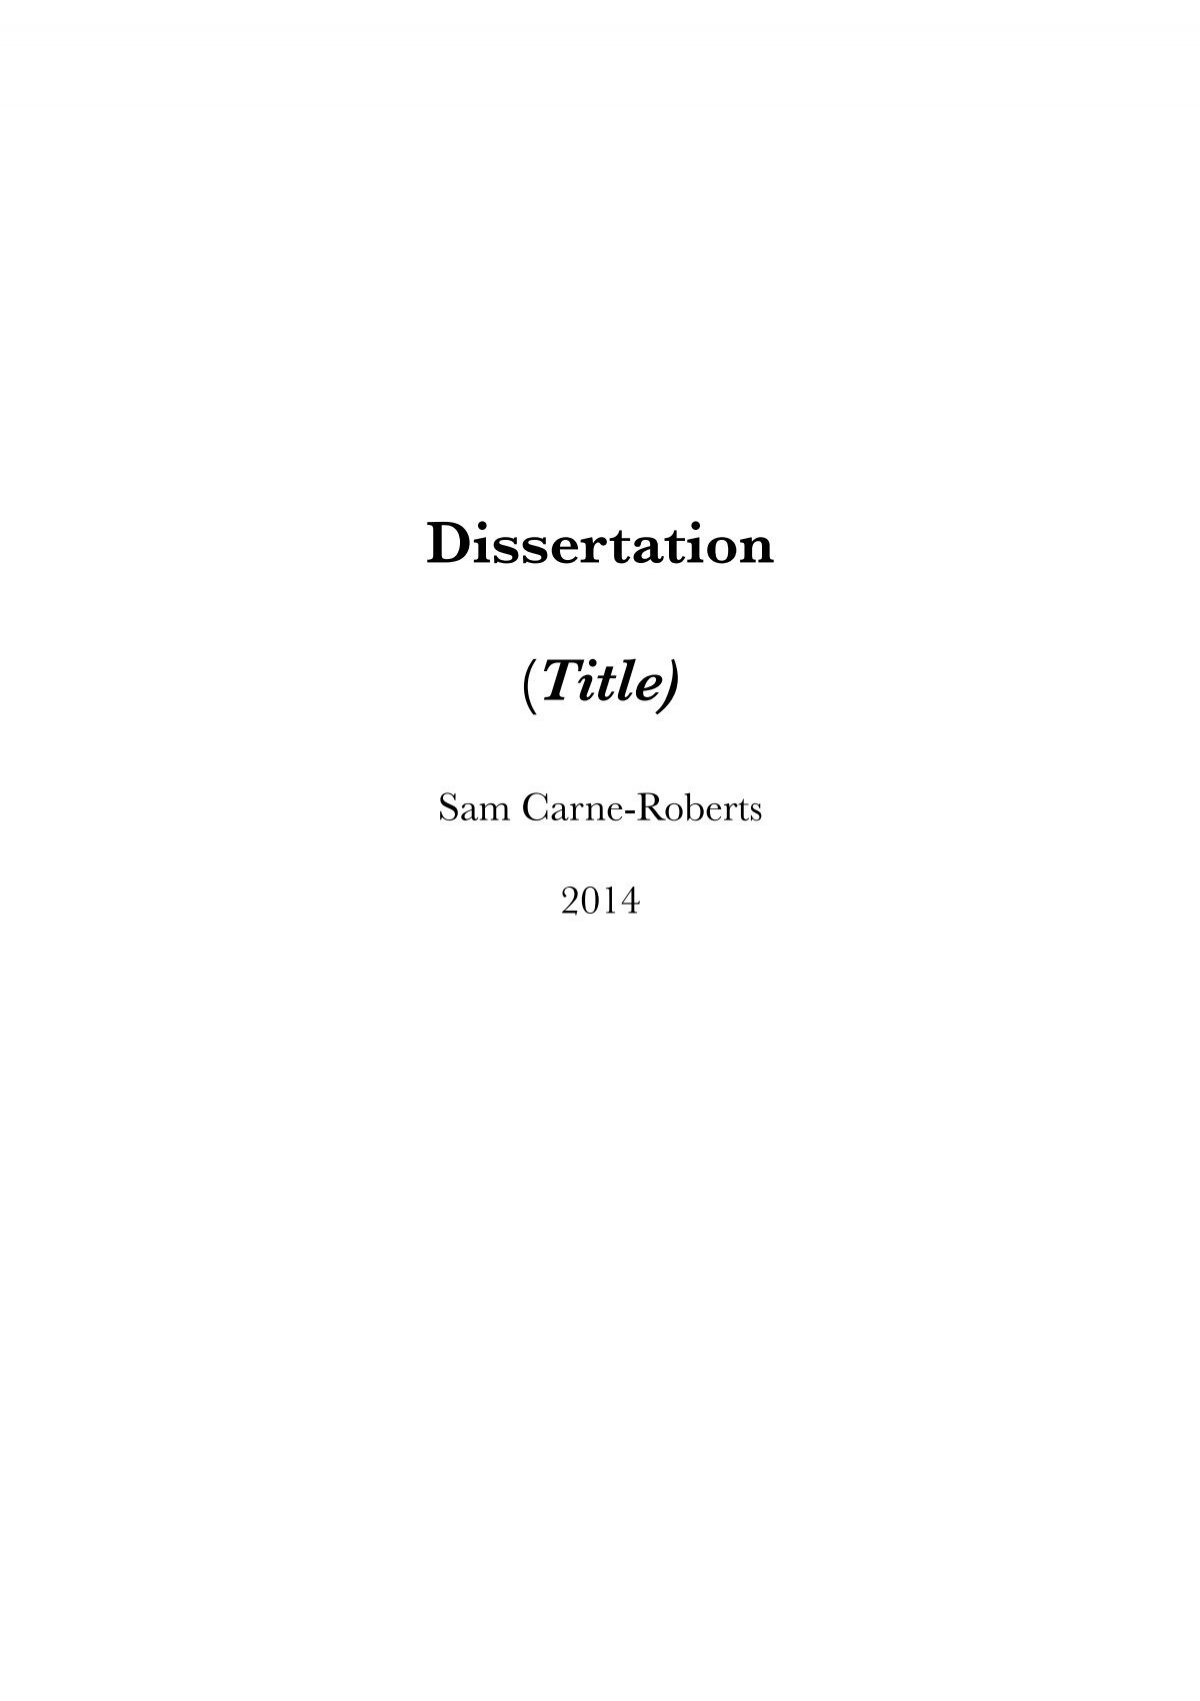 generate dissertation title